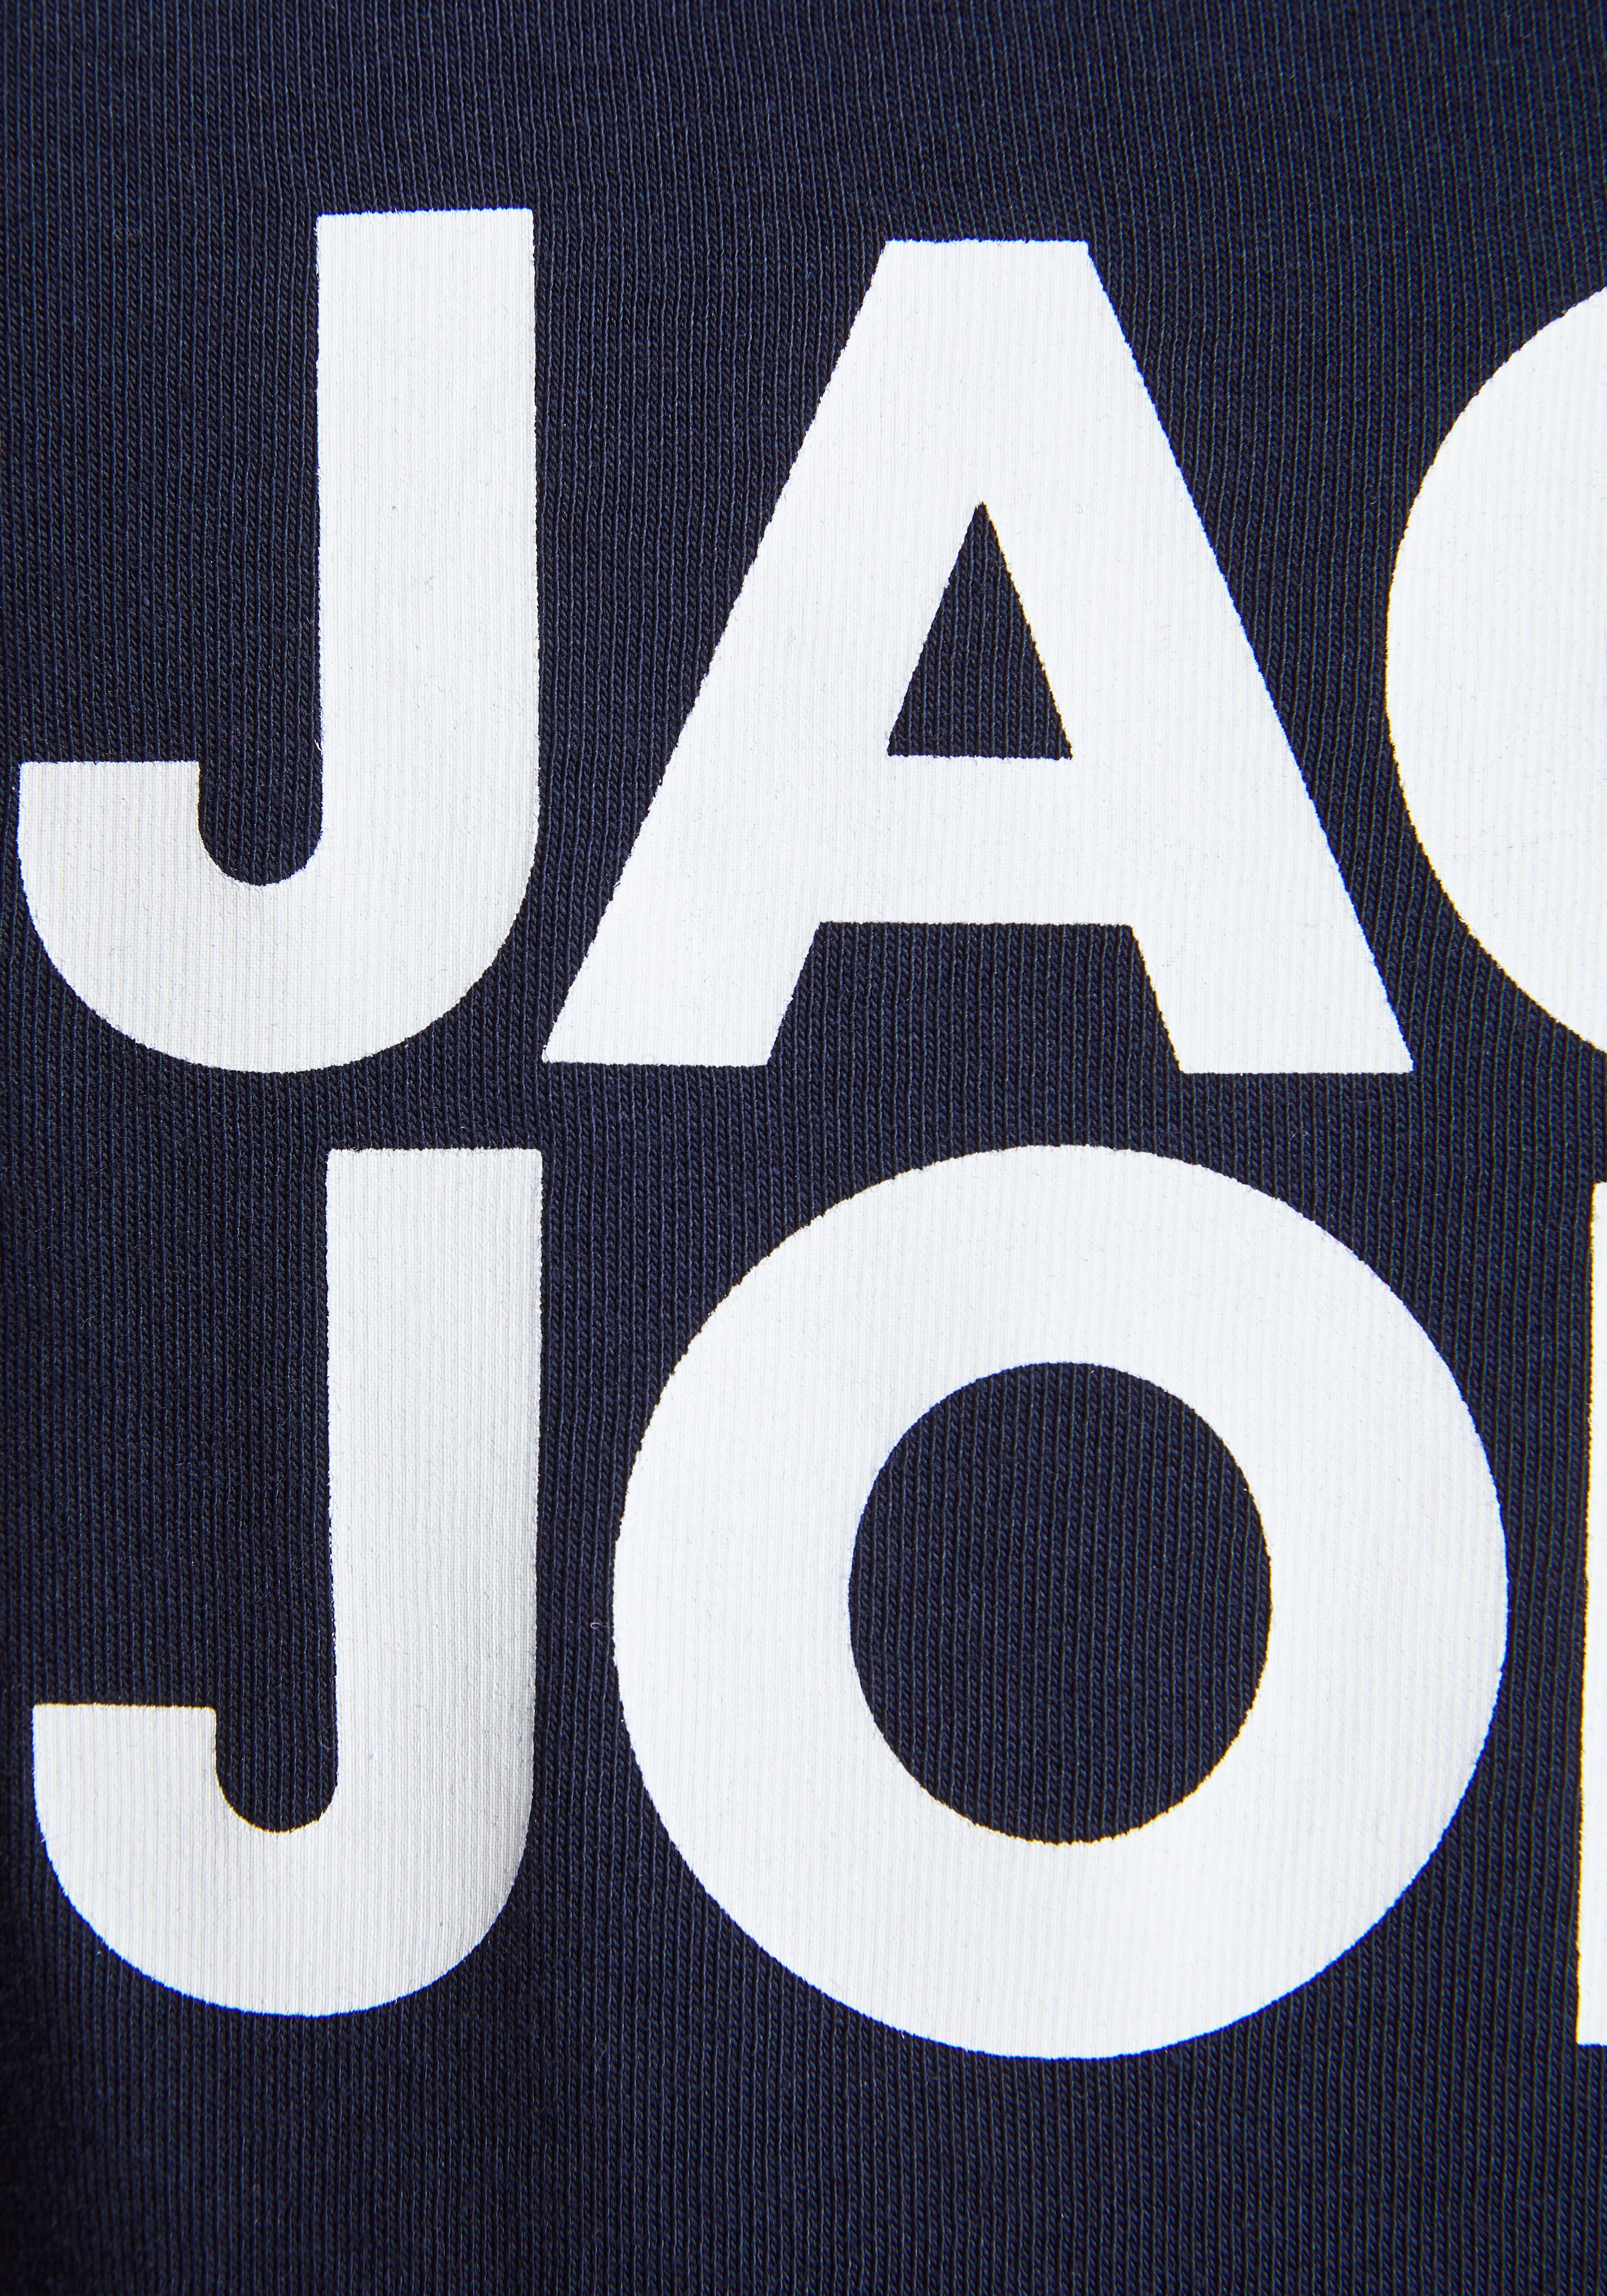 navy T-Shirt Jones & Junior blazer/Large Print Jack